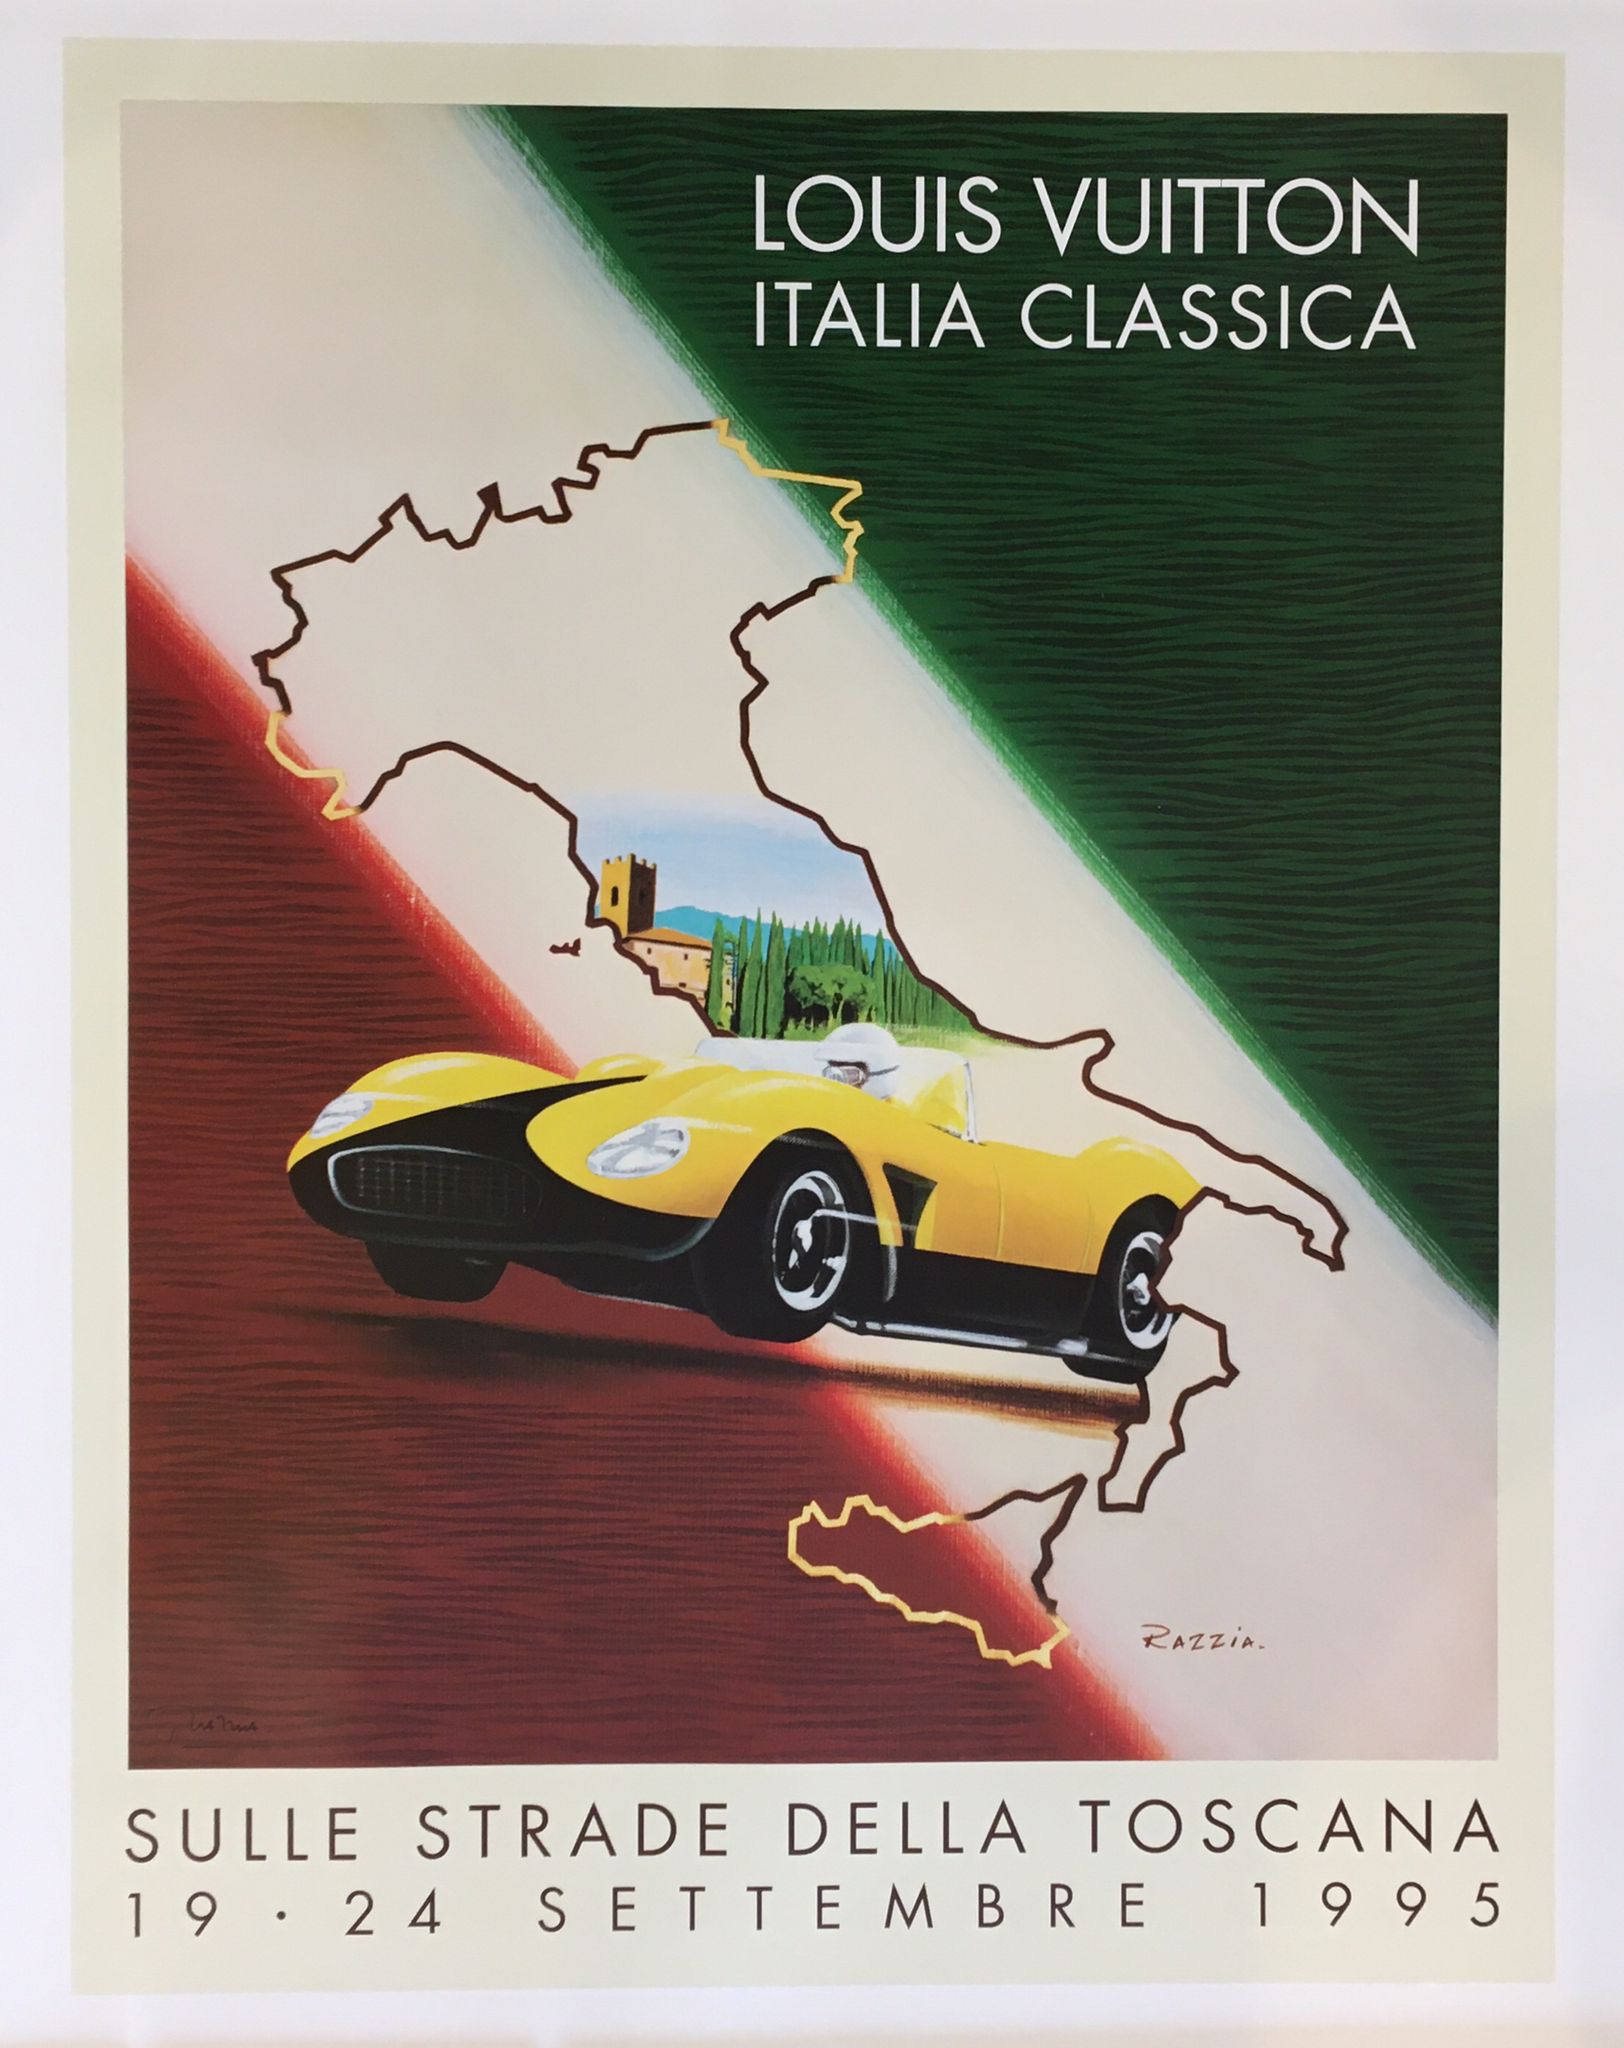 Manifesto Pubblicitario Louis Vuitton Italia Classica Ferrari (Razzia) Tortona4Arte